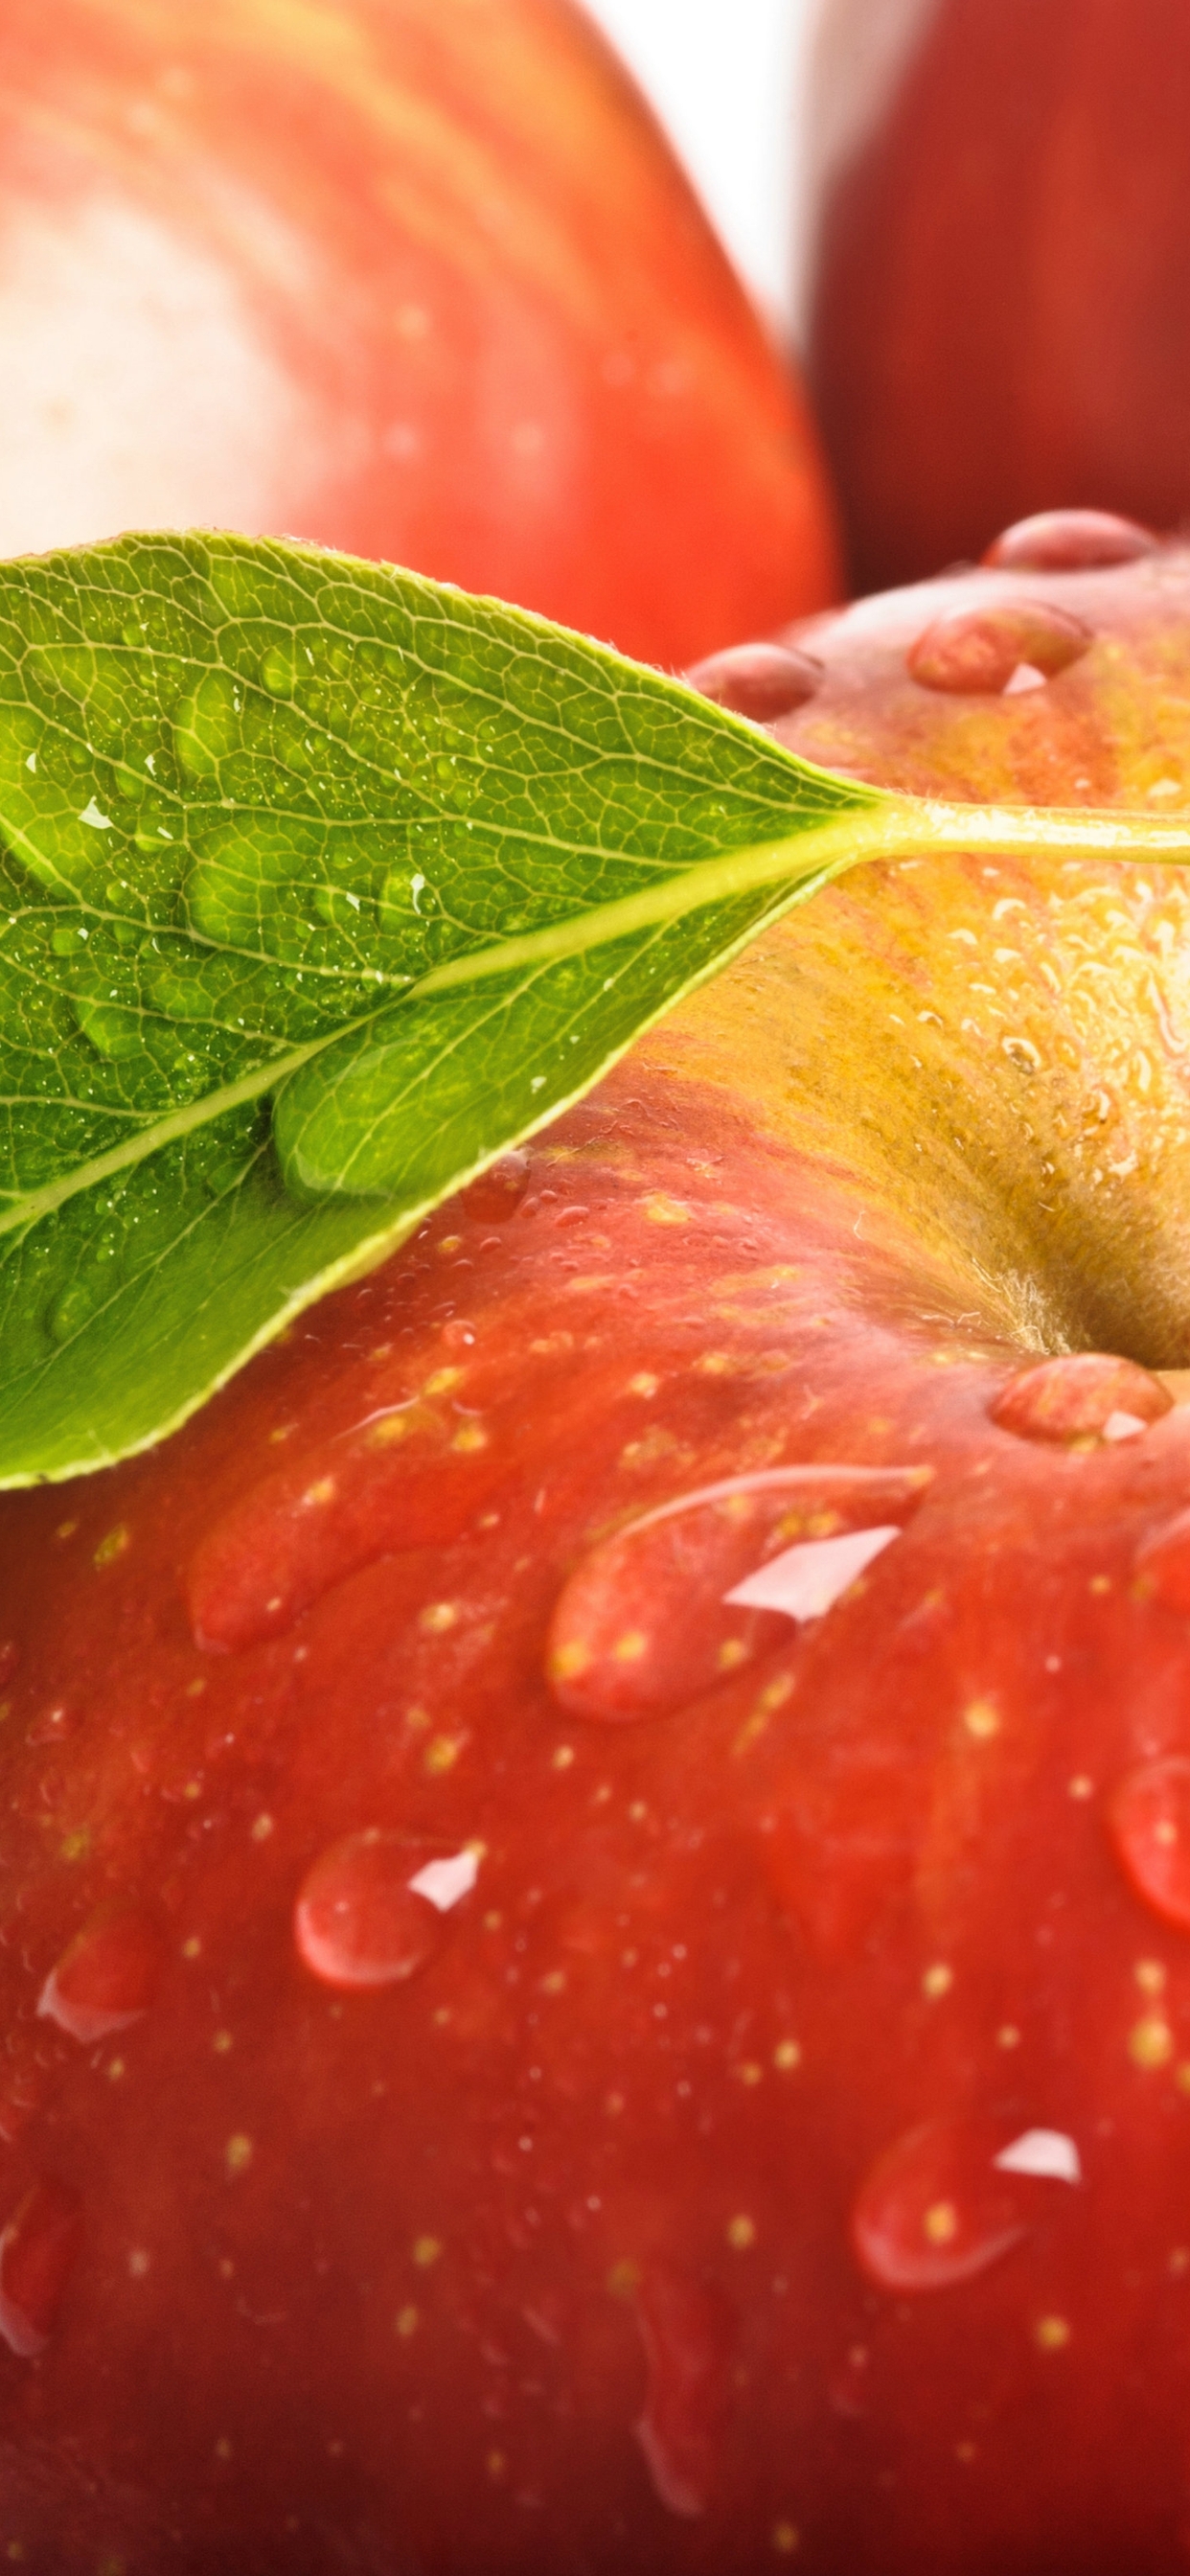 Image: Apples, red, fruit, leaf, water, drops